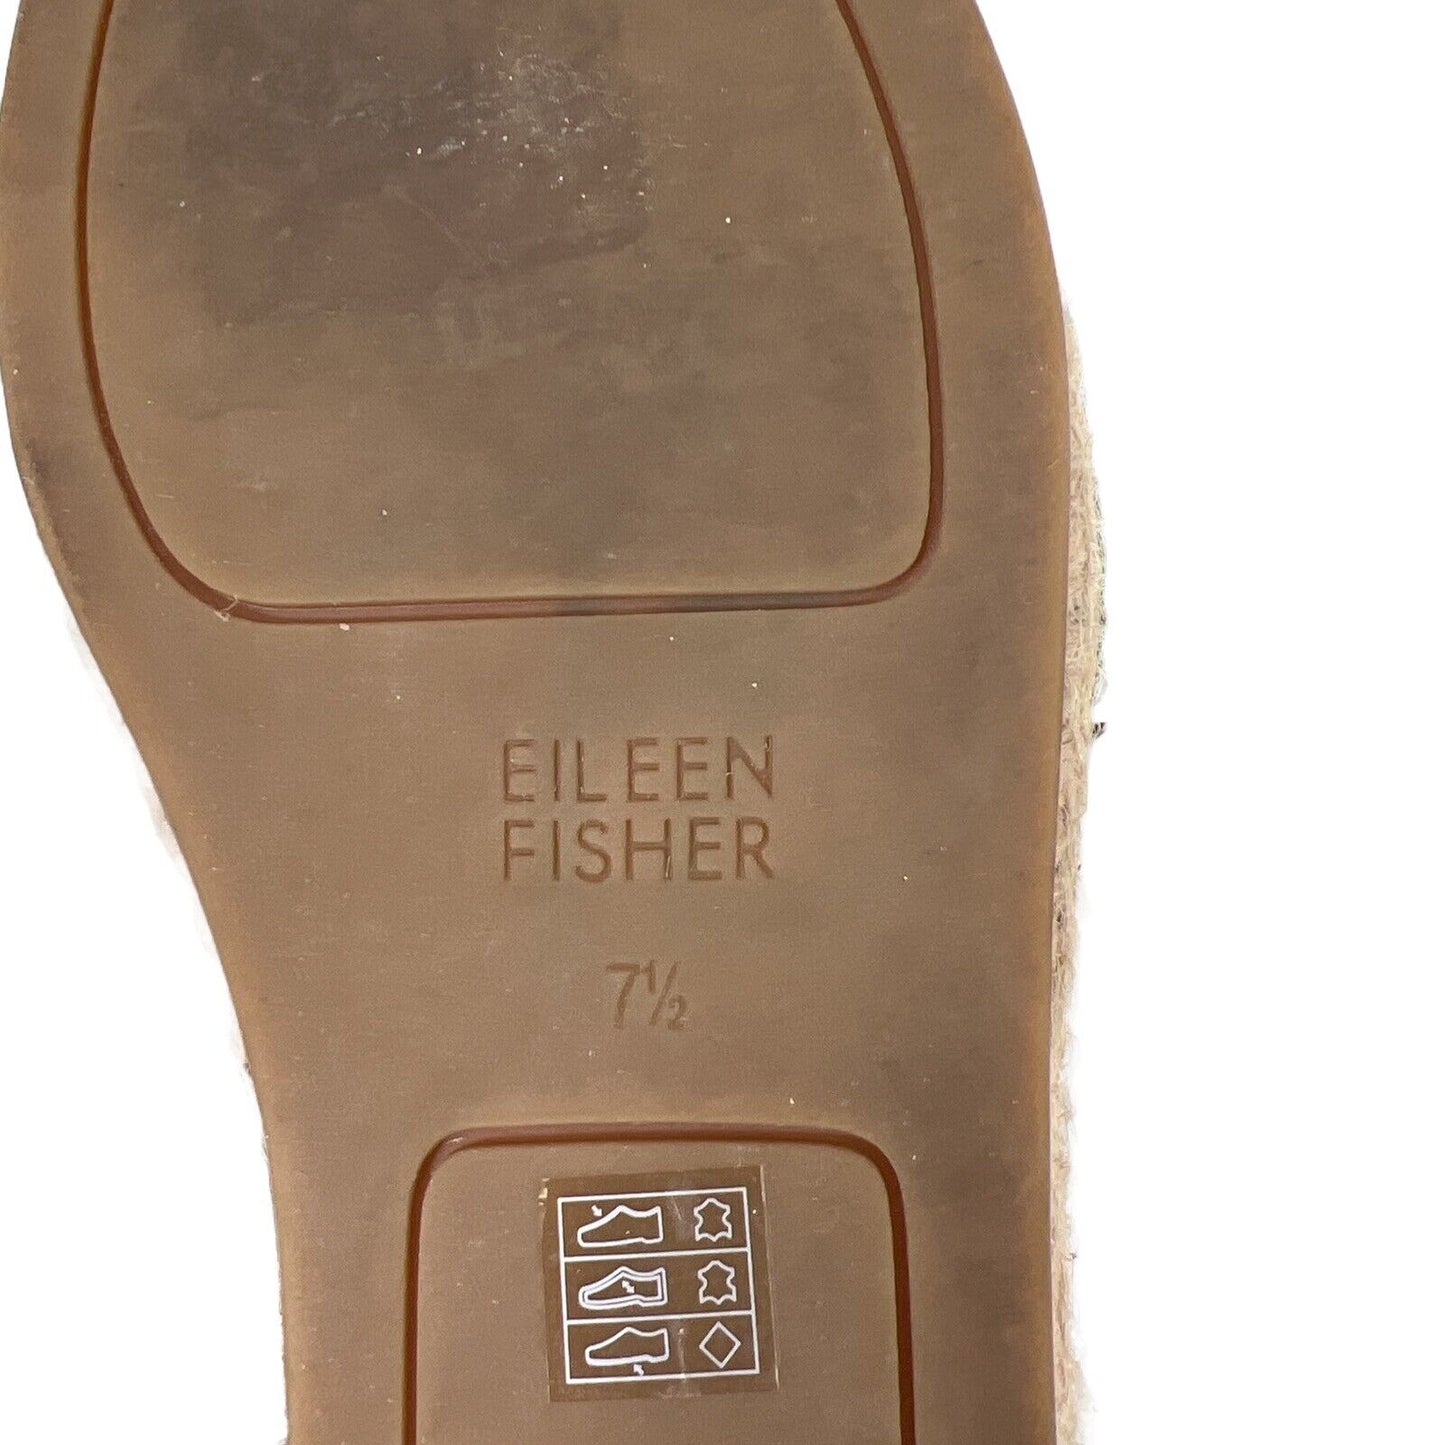 Eileen Fisher Women's Black Leather Espadrille Flats - 7.5